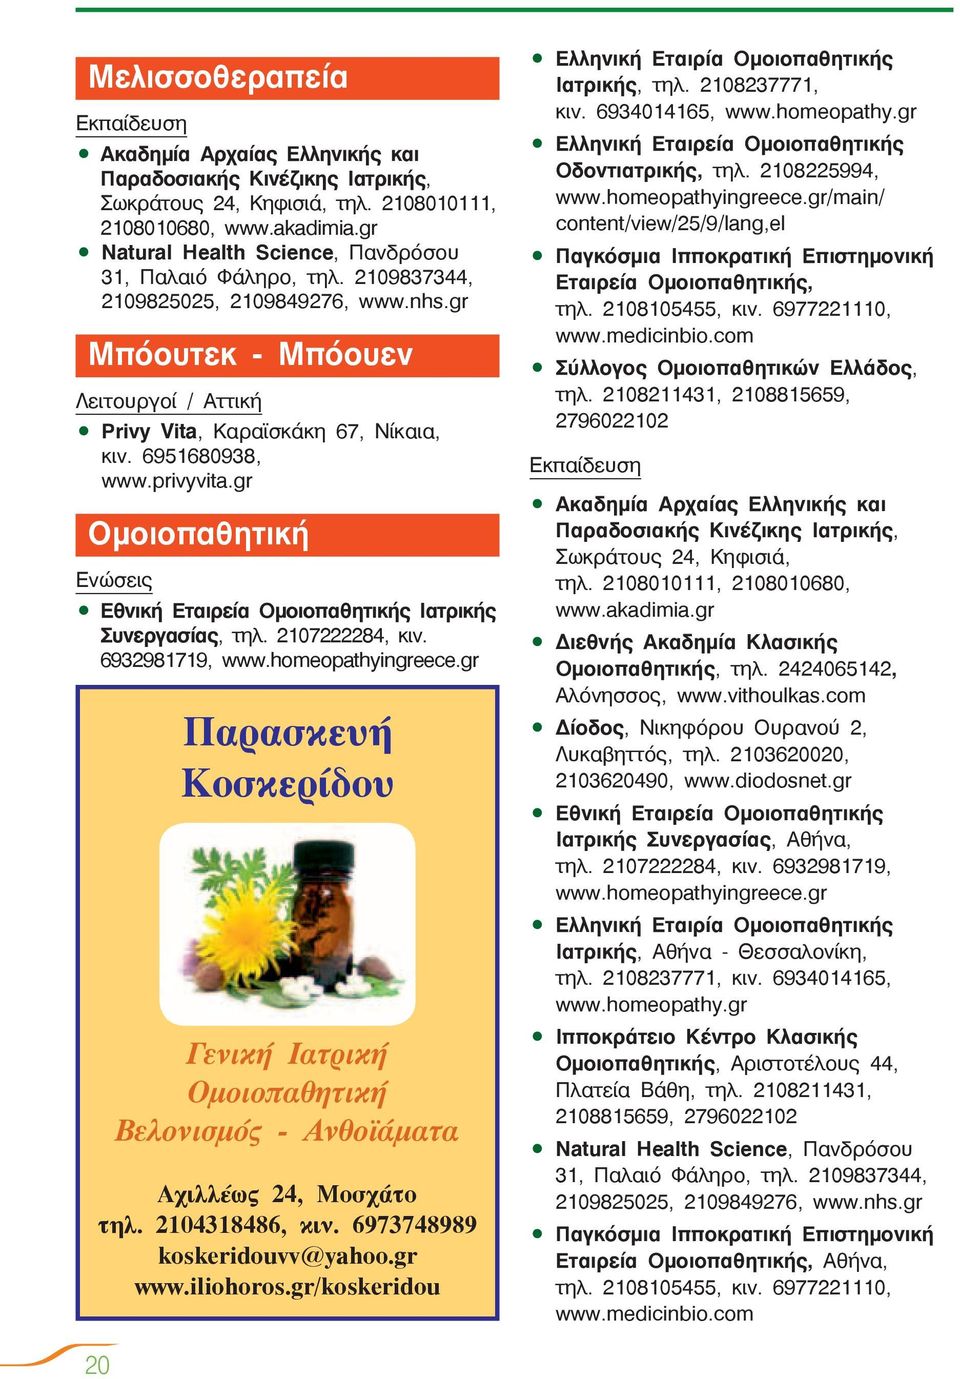 gr Ομοιοπαθητική Ενώσεις Εθνική Εταιρεία Ομοιοπαθητικής Ιατρικής Συνεργασίας, τηλ. 2107222284, κιν. 6932981719, www.homeopathyingreece.